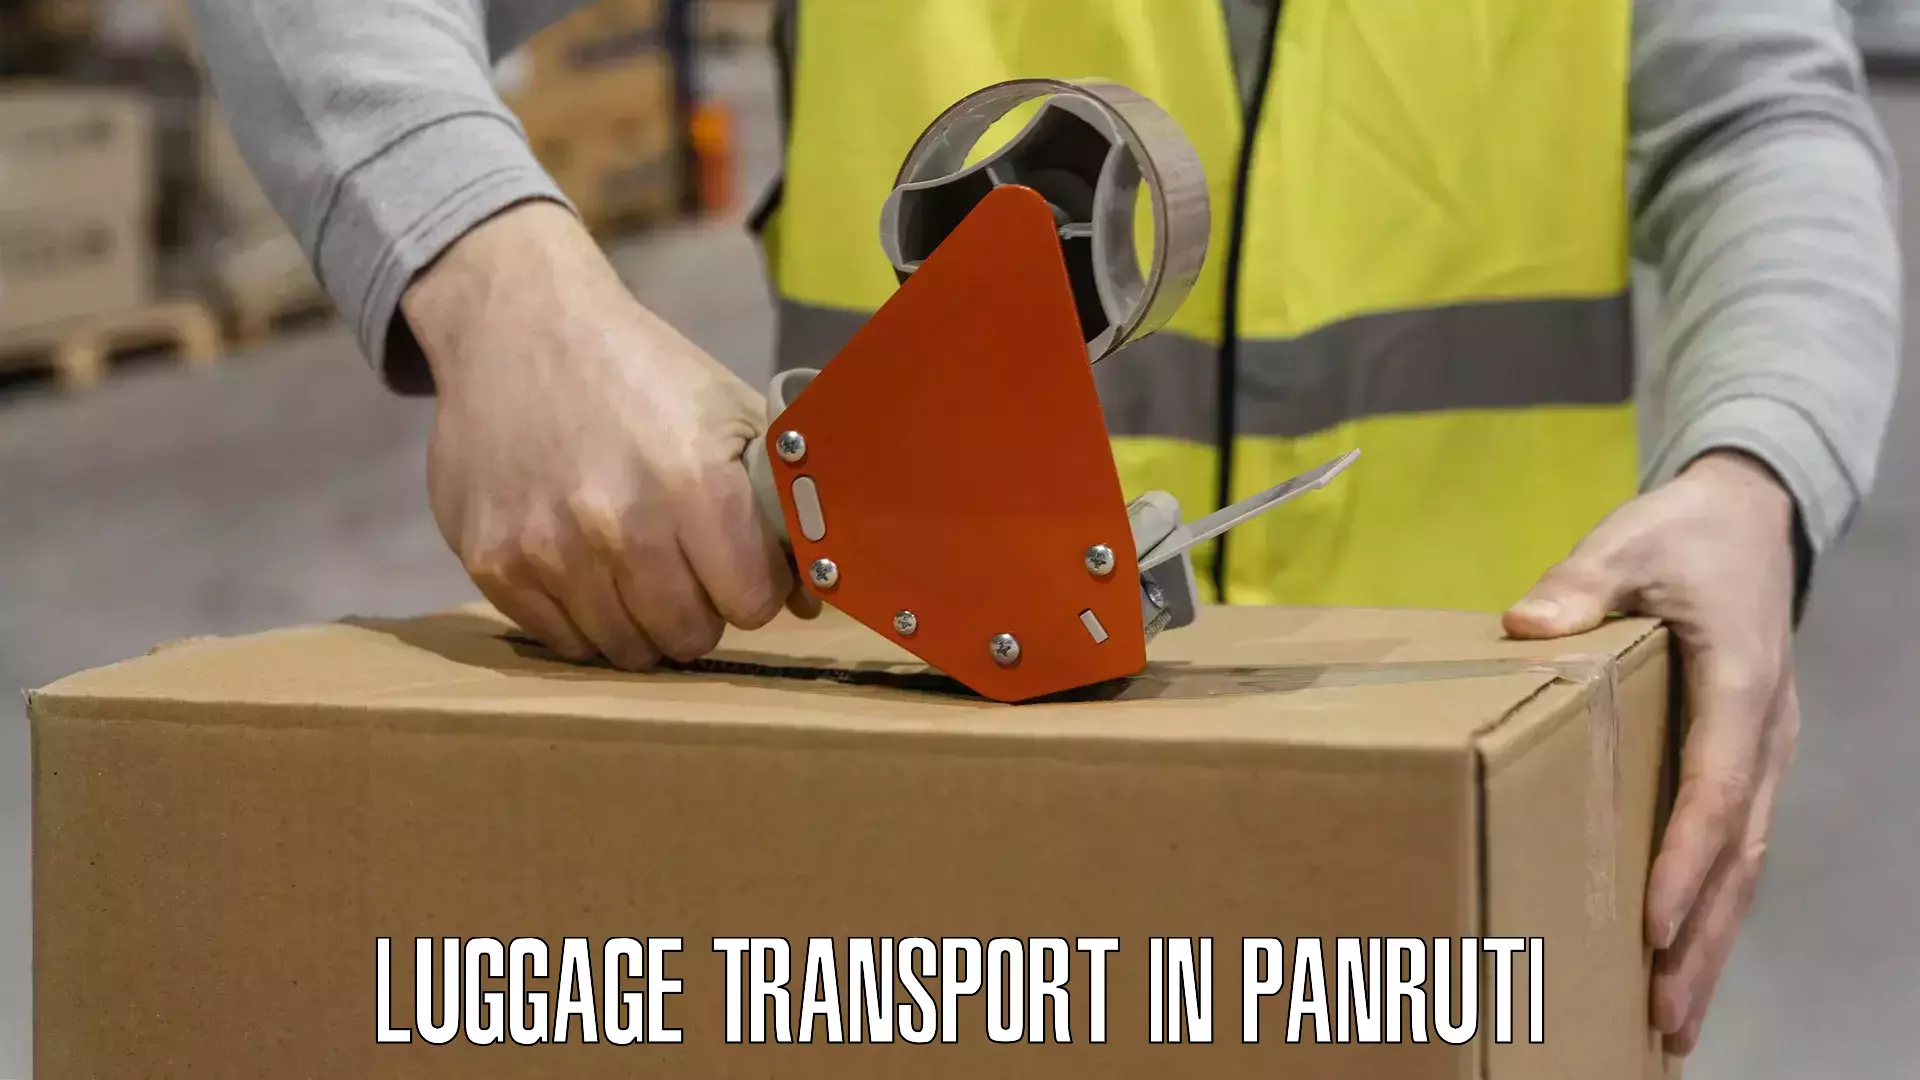 Baggage relocation service in Panruti